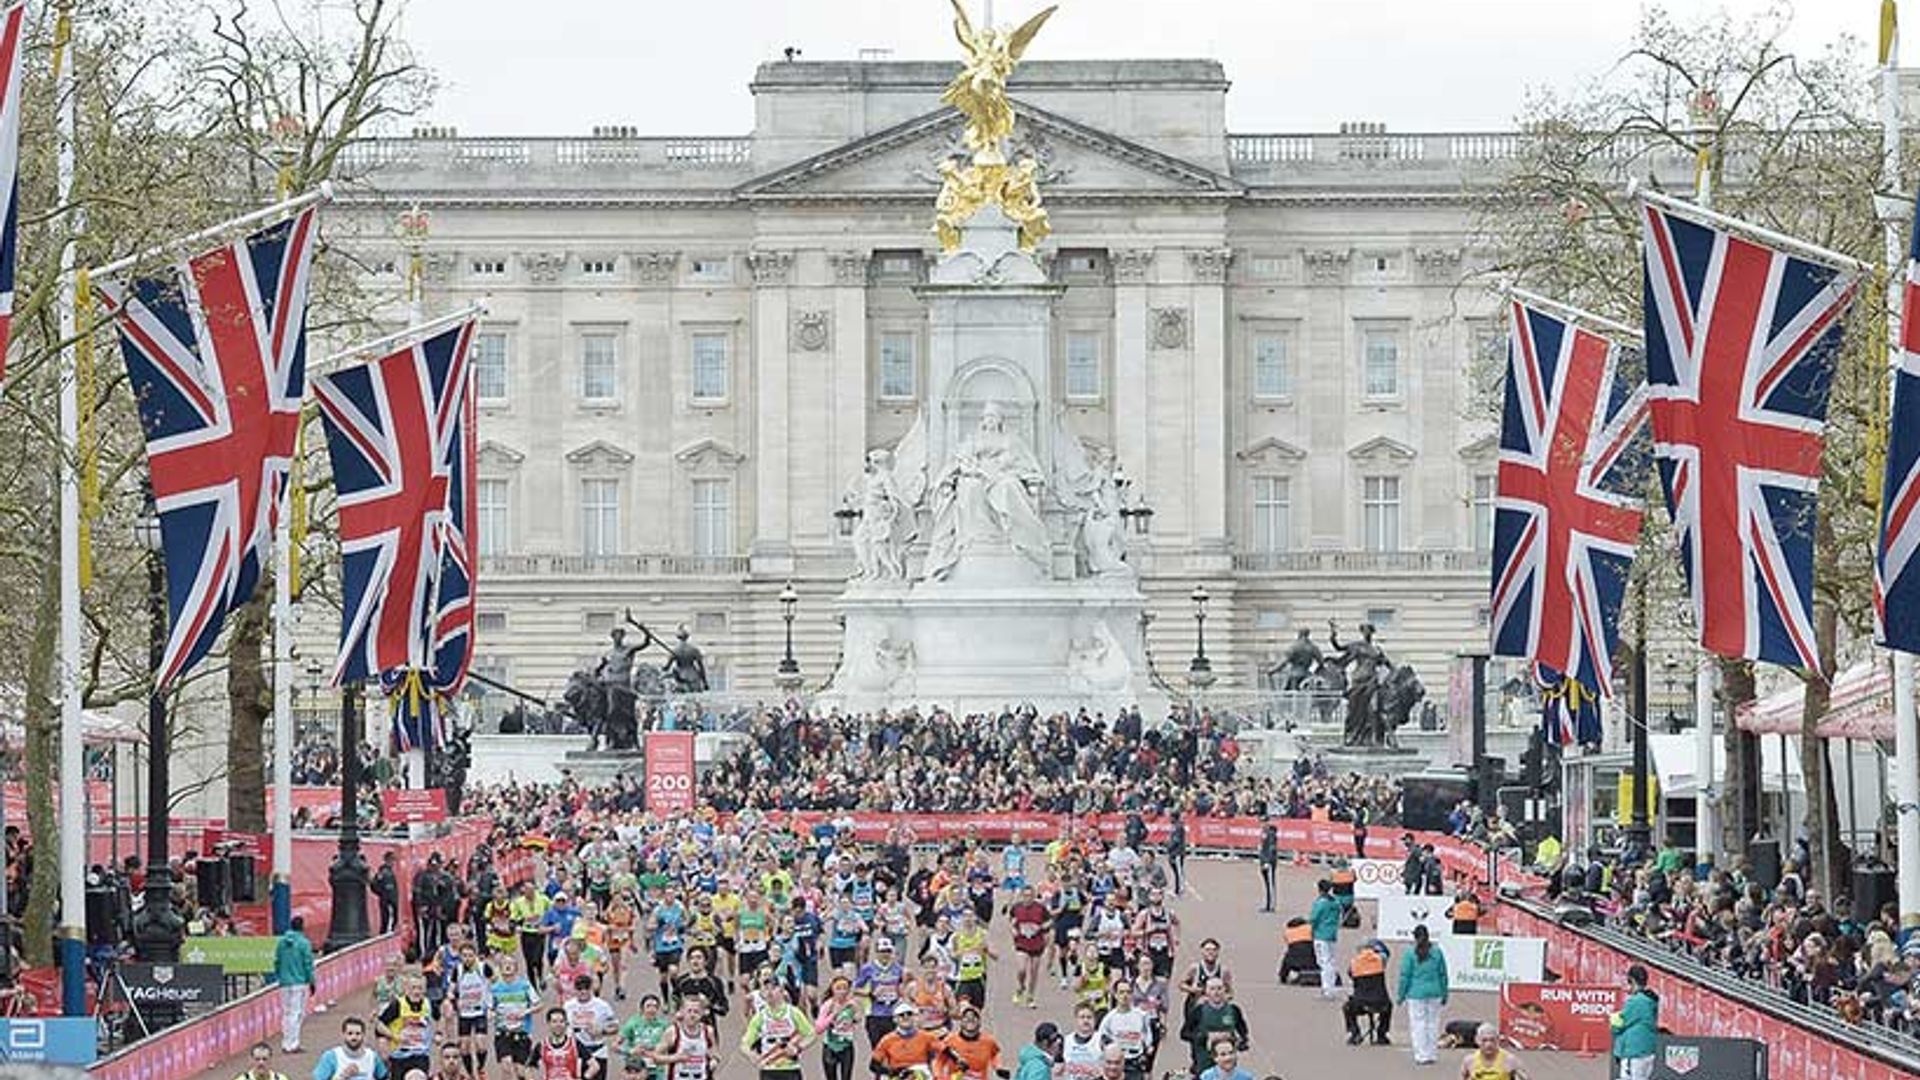 London Marathon crowd